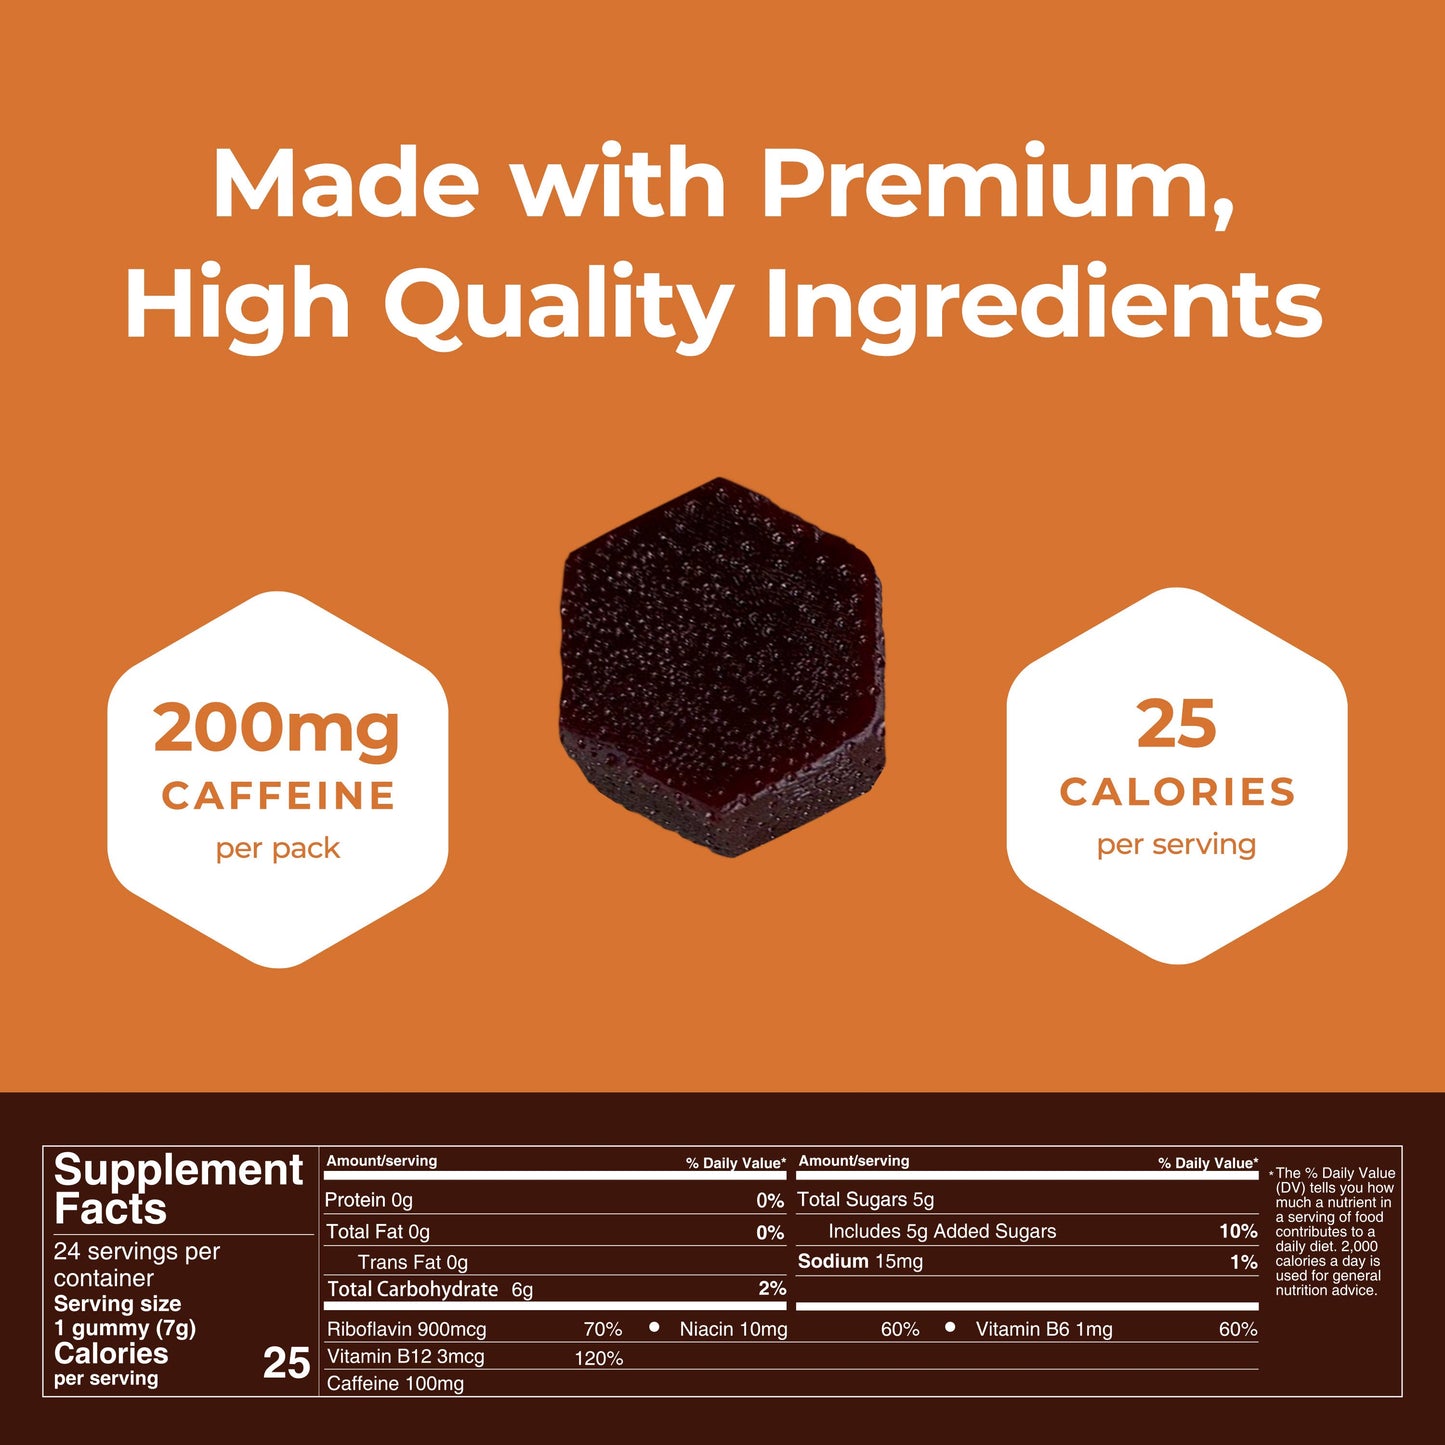 Mocca Shots Salted Caramel Chocolate Caffeine Gummy |12-Pack